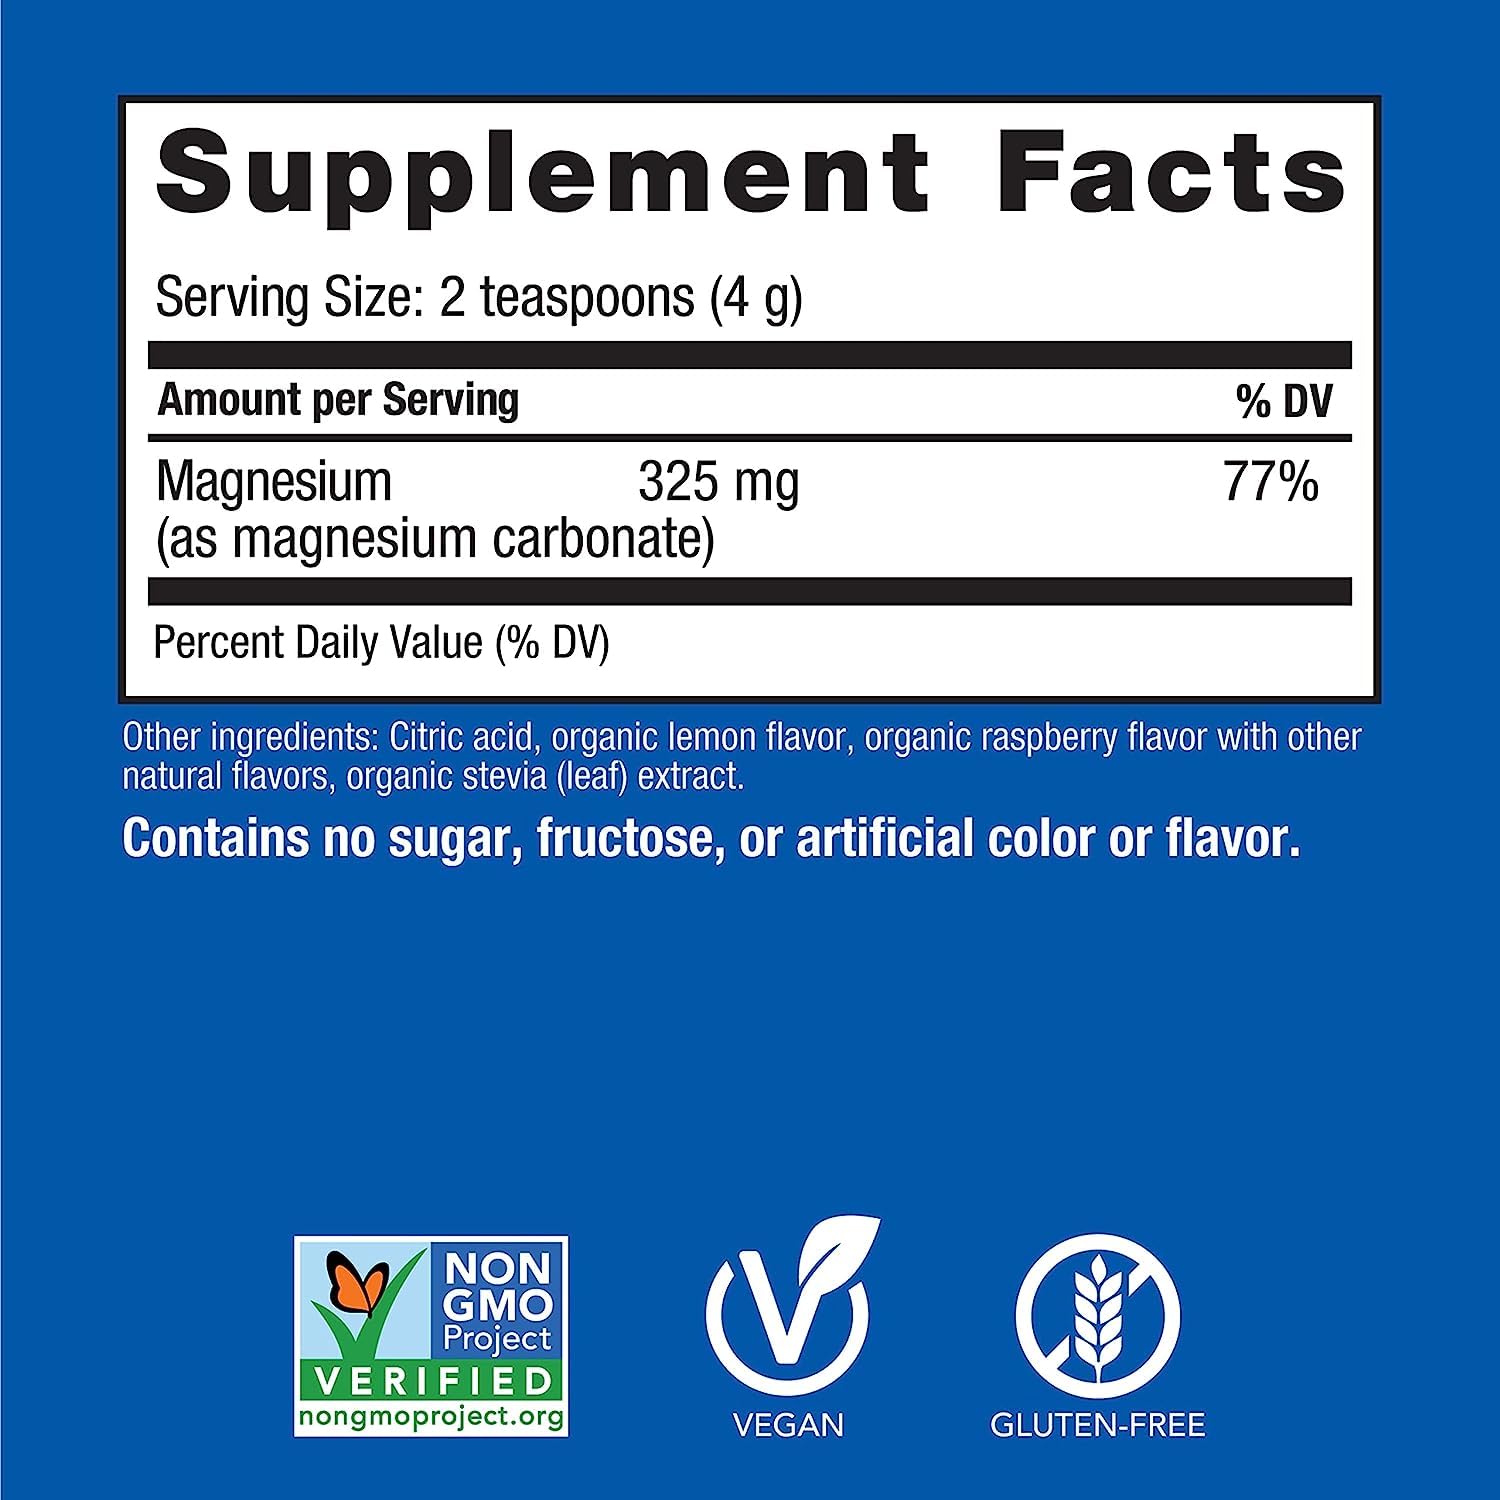 Natural Vitality Calm, Magnesium Citrate Supplement, Anti-Stress Drink Mix Powder - Gluten Free, Vegan, & Non-GMO, Raspberry Lemon, 16 oz (Pack of 1) & 0.12 oz (Pack of 30)